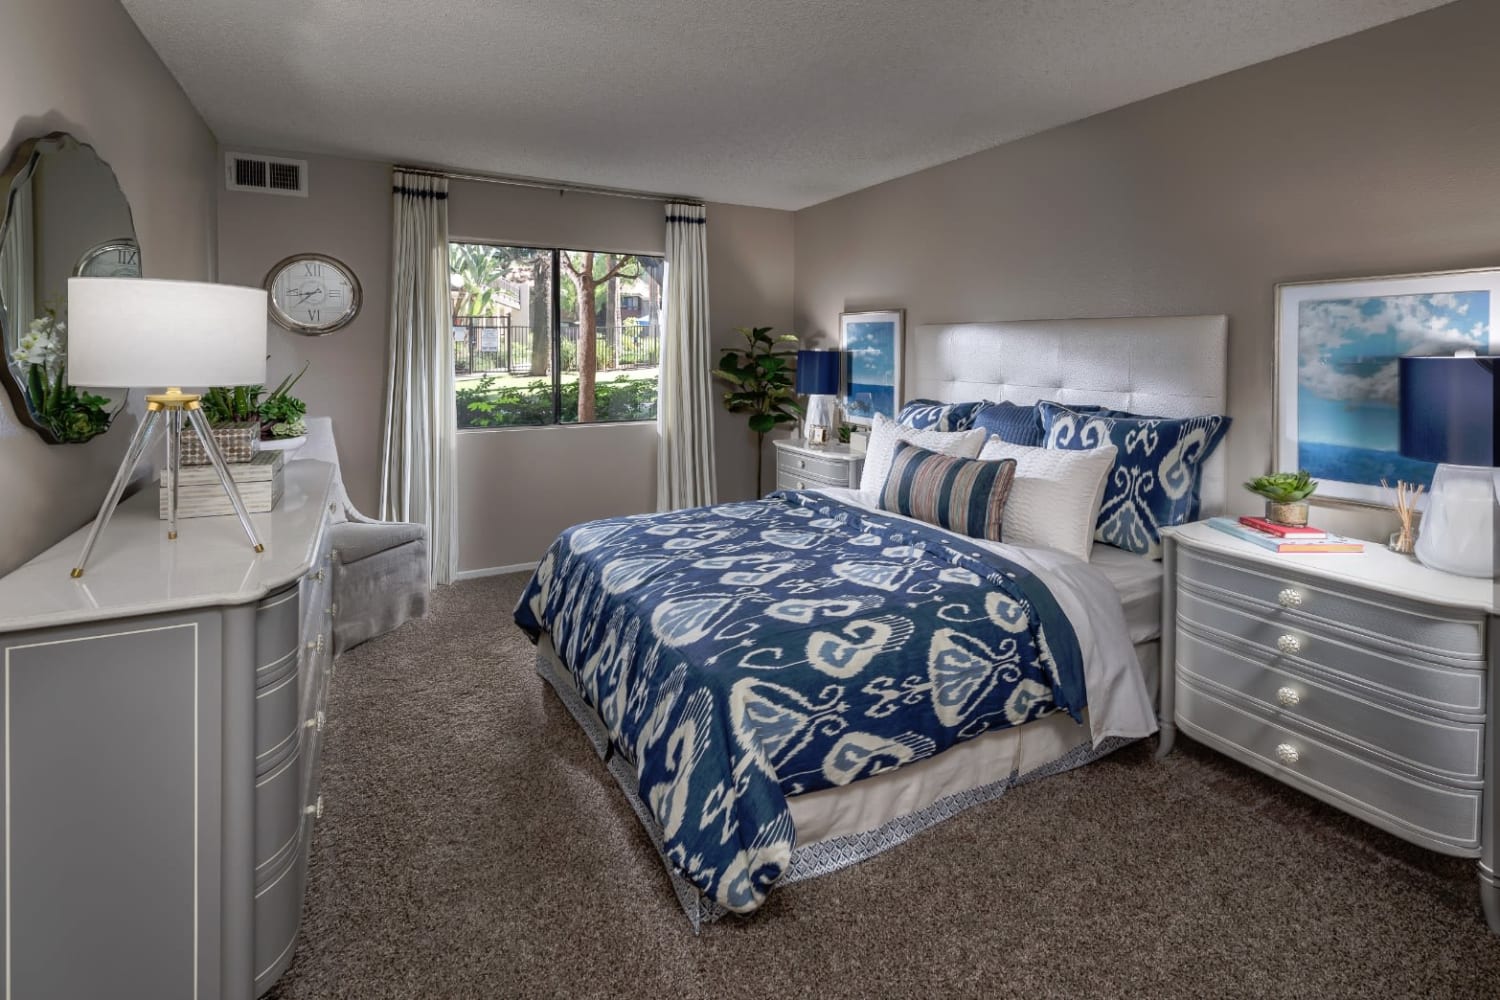 Enjoy large open bedrooms at Parcwood Apartments in Corona, California